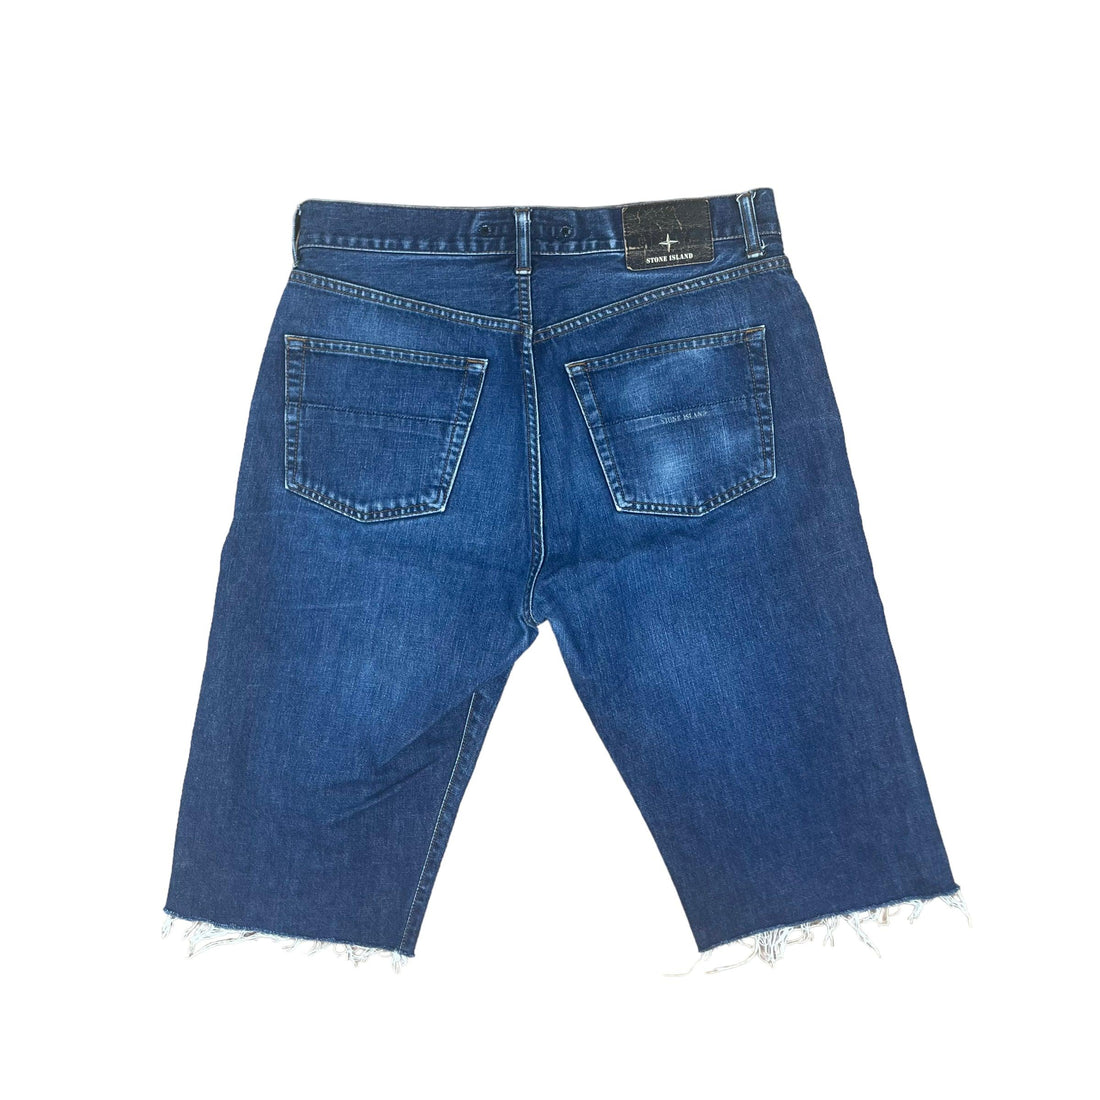 Vintage 90s Navy Blue Stone Island Jean Shorts - 34” - The Streetwear Studio